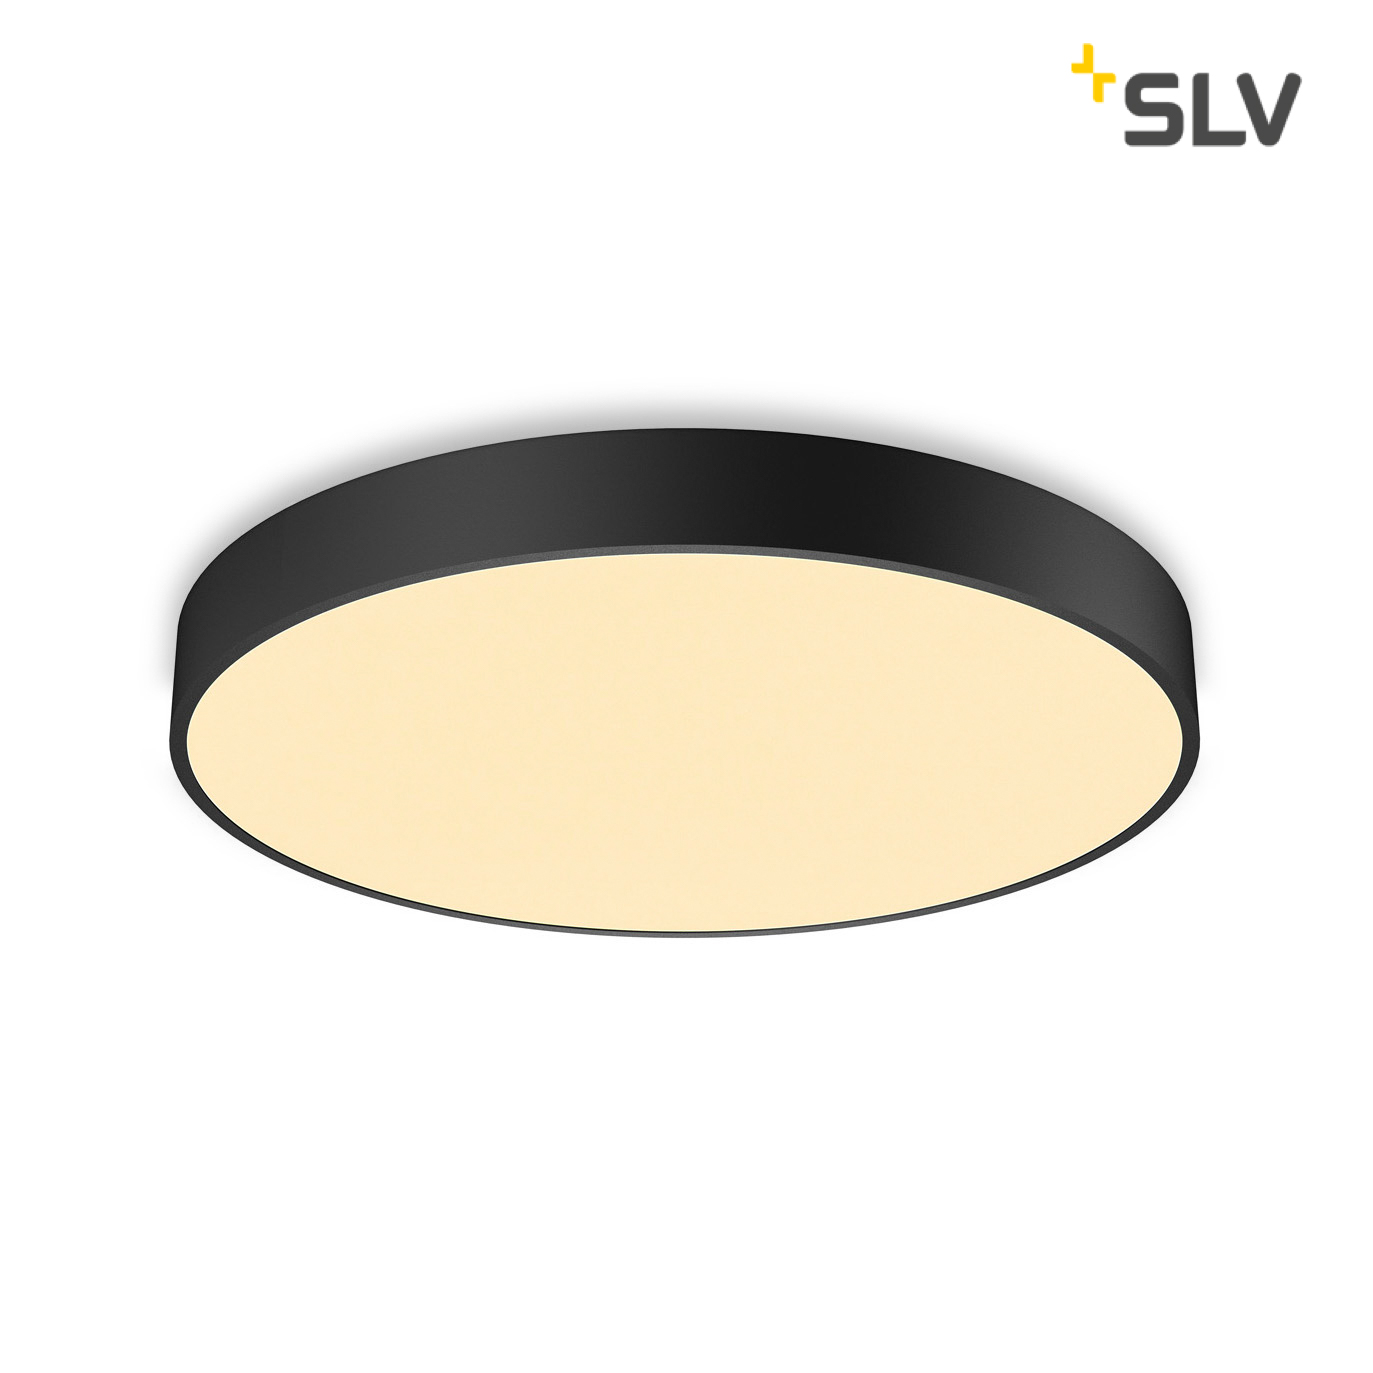 SLV Medo 60 CW Corona LED Wall and Ceiling Light black